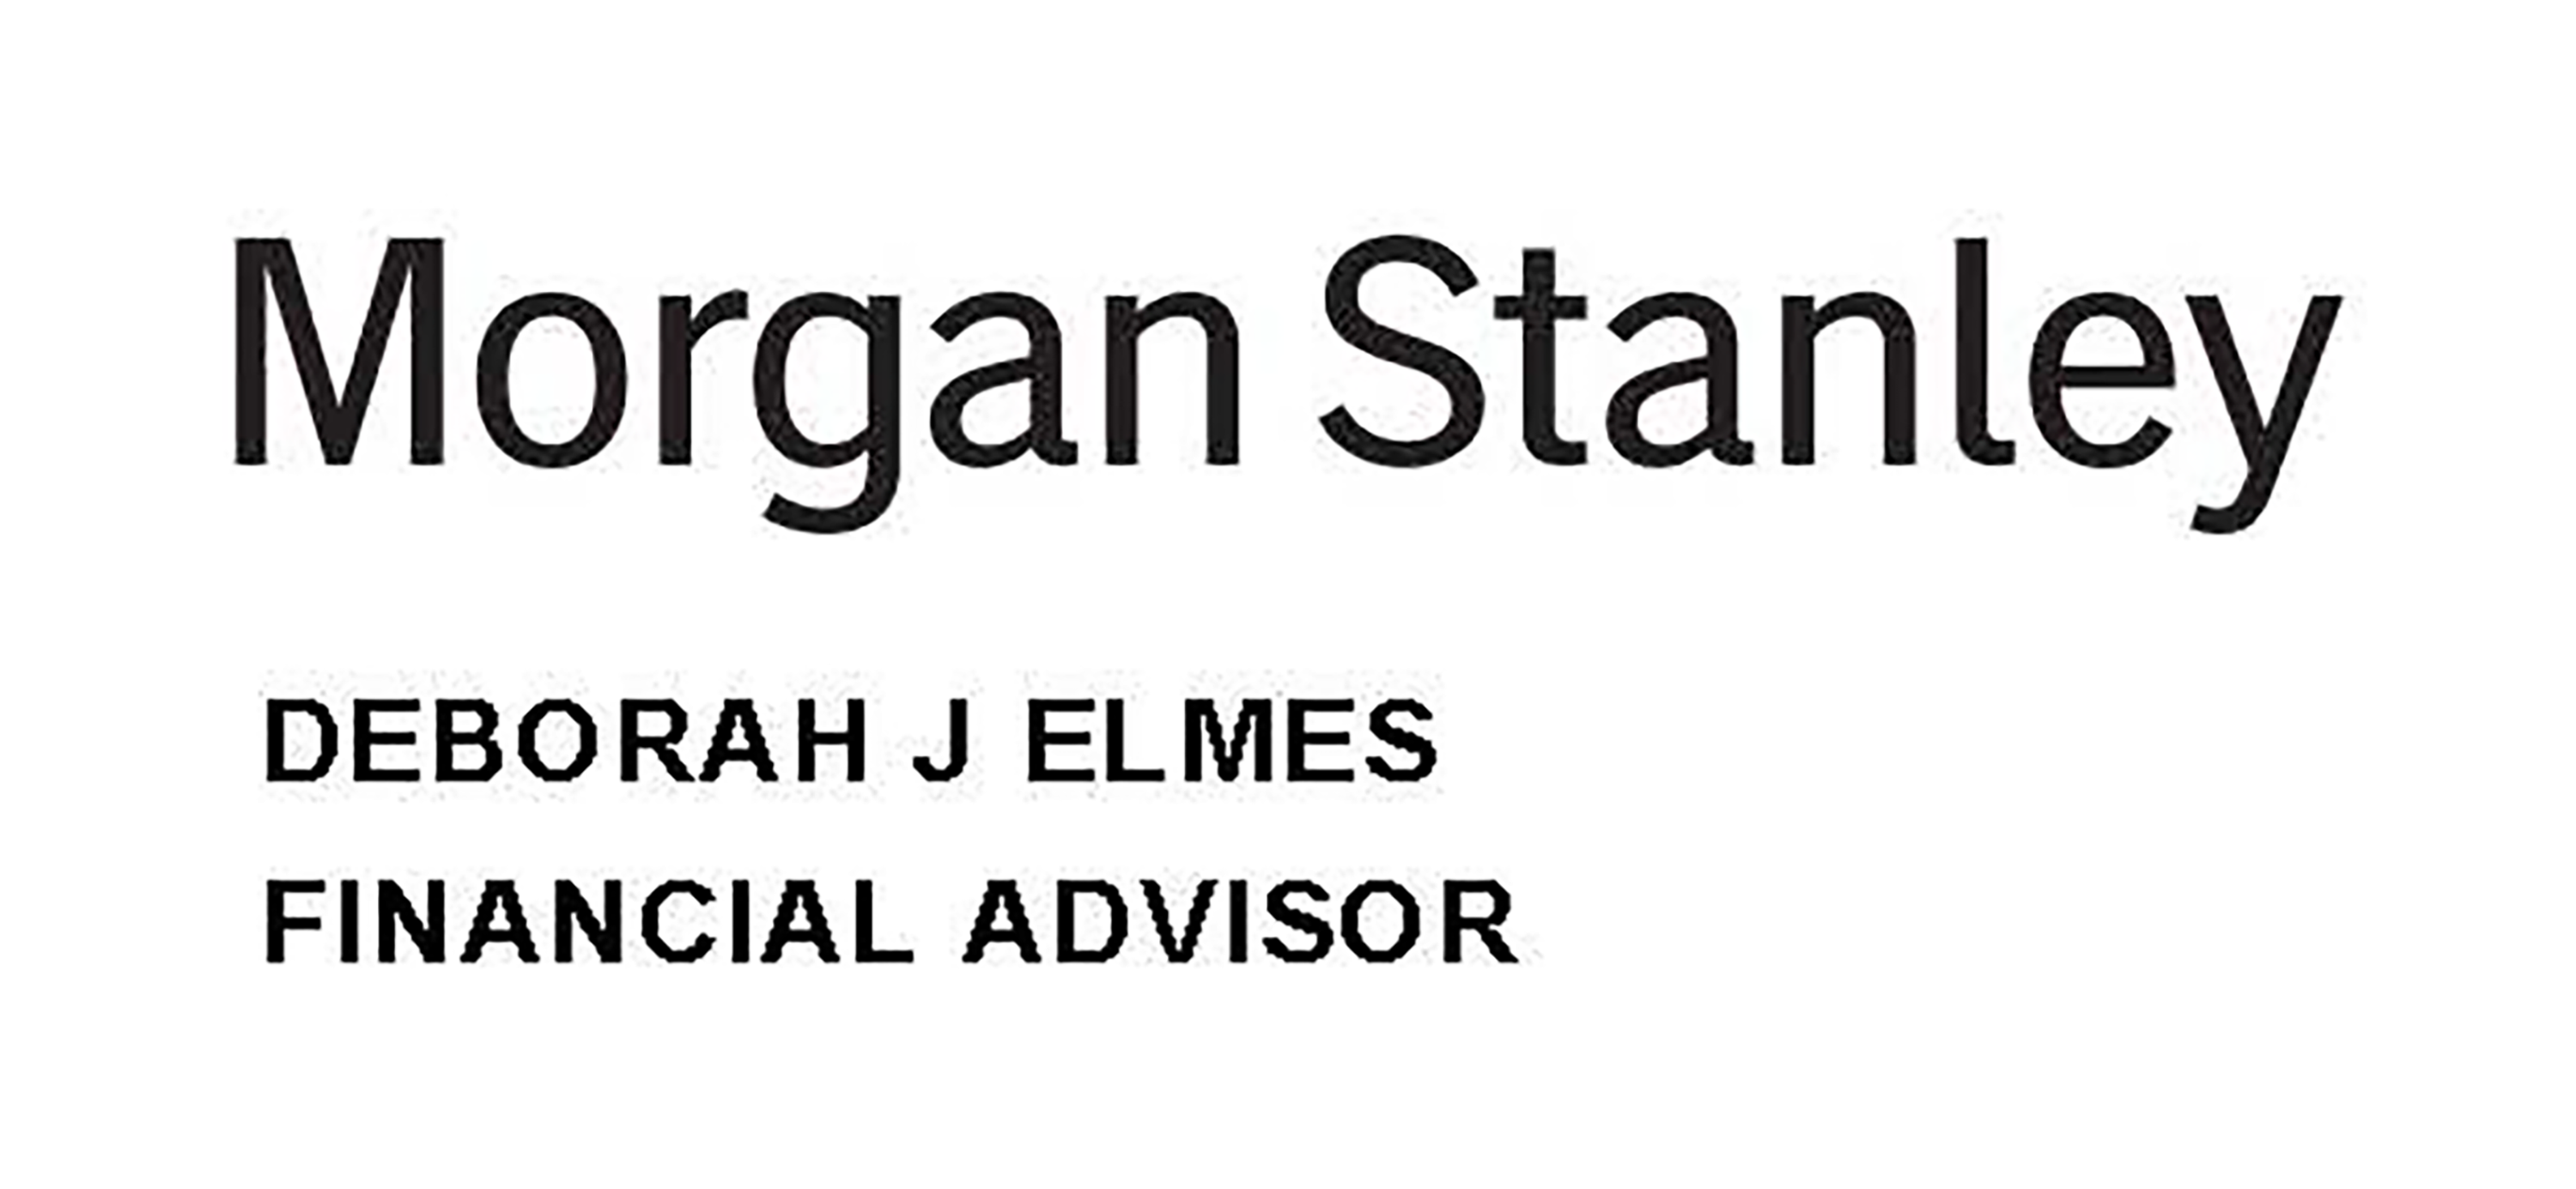 Morgan Stanley Deborah J Elmes